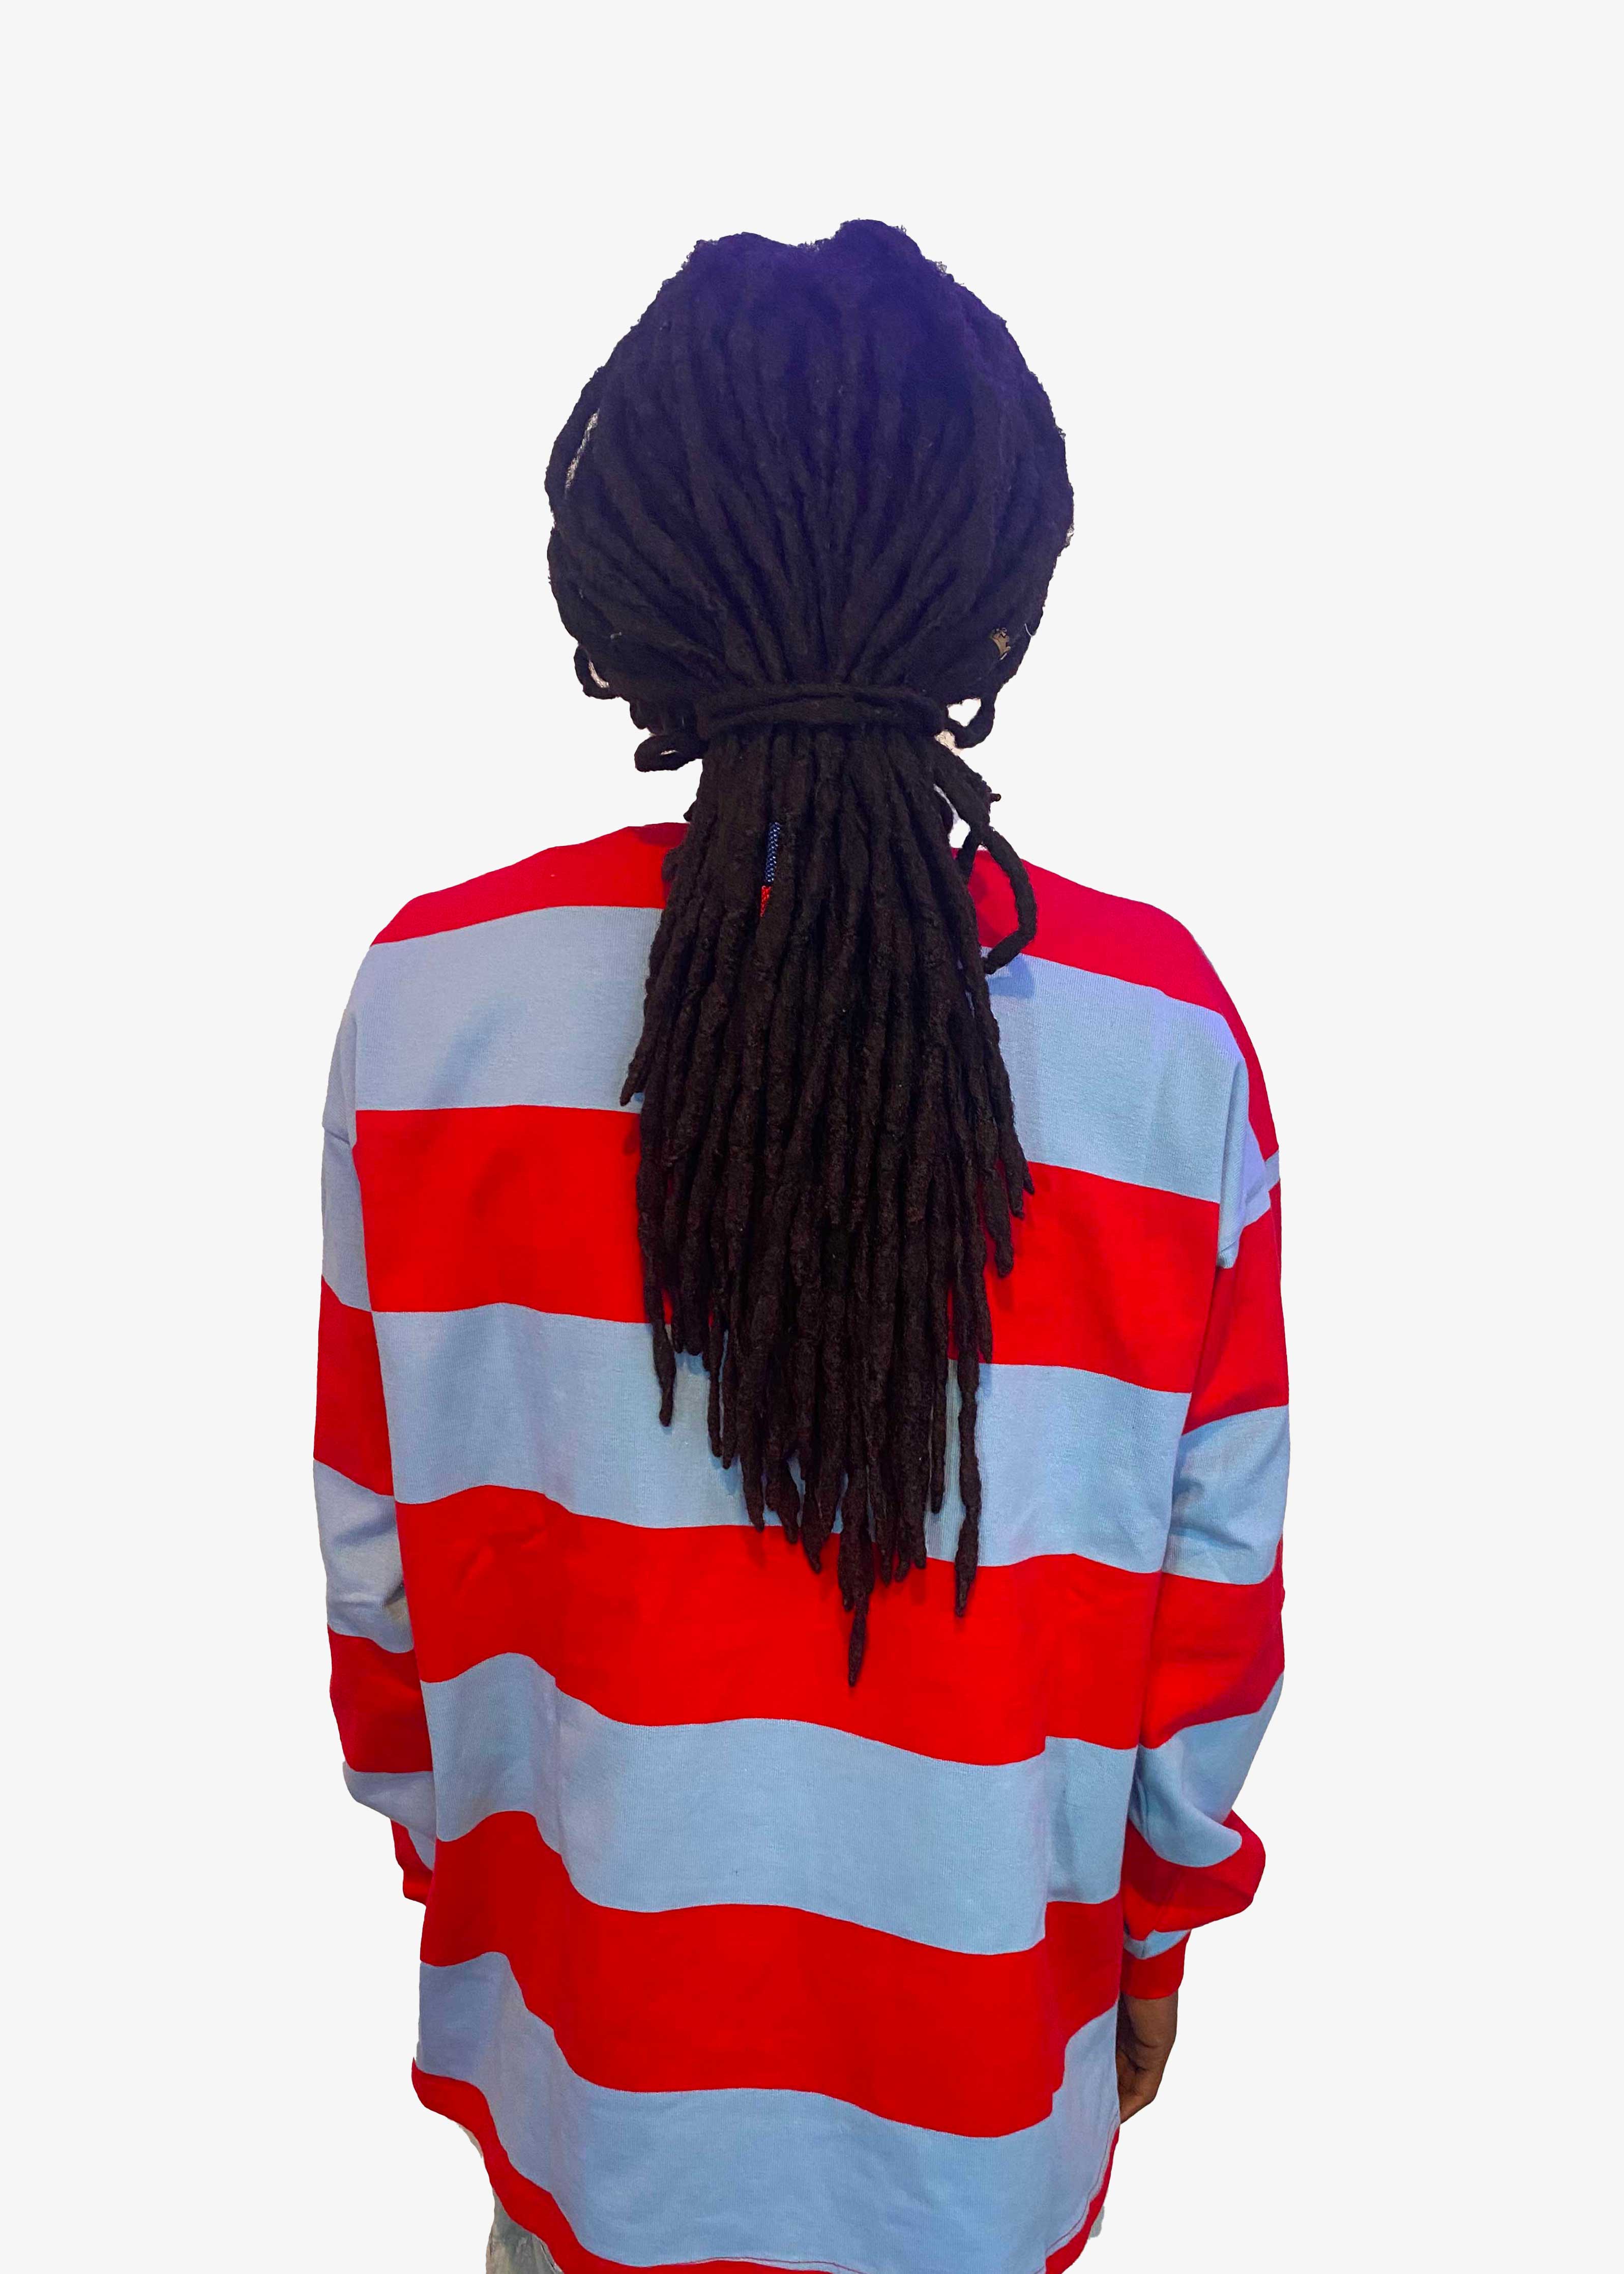 Red Stripe Shirt -  Canada